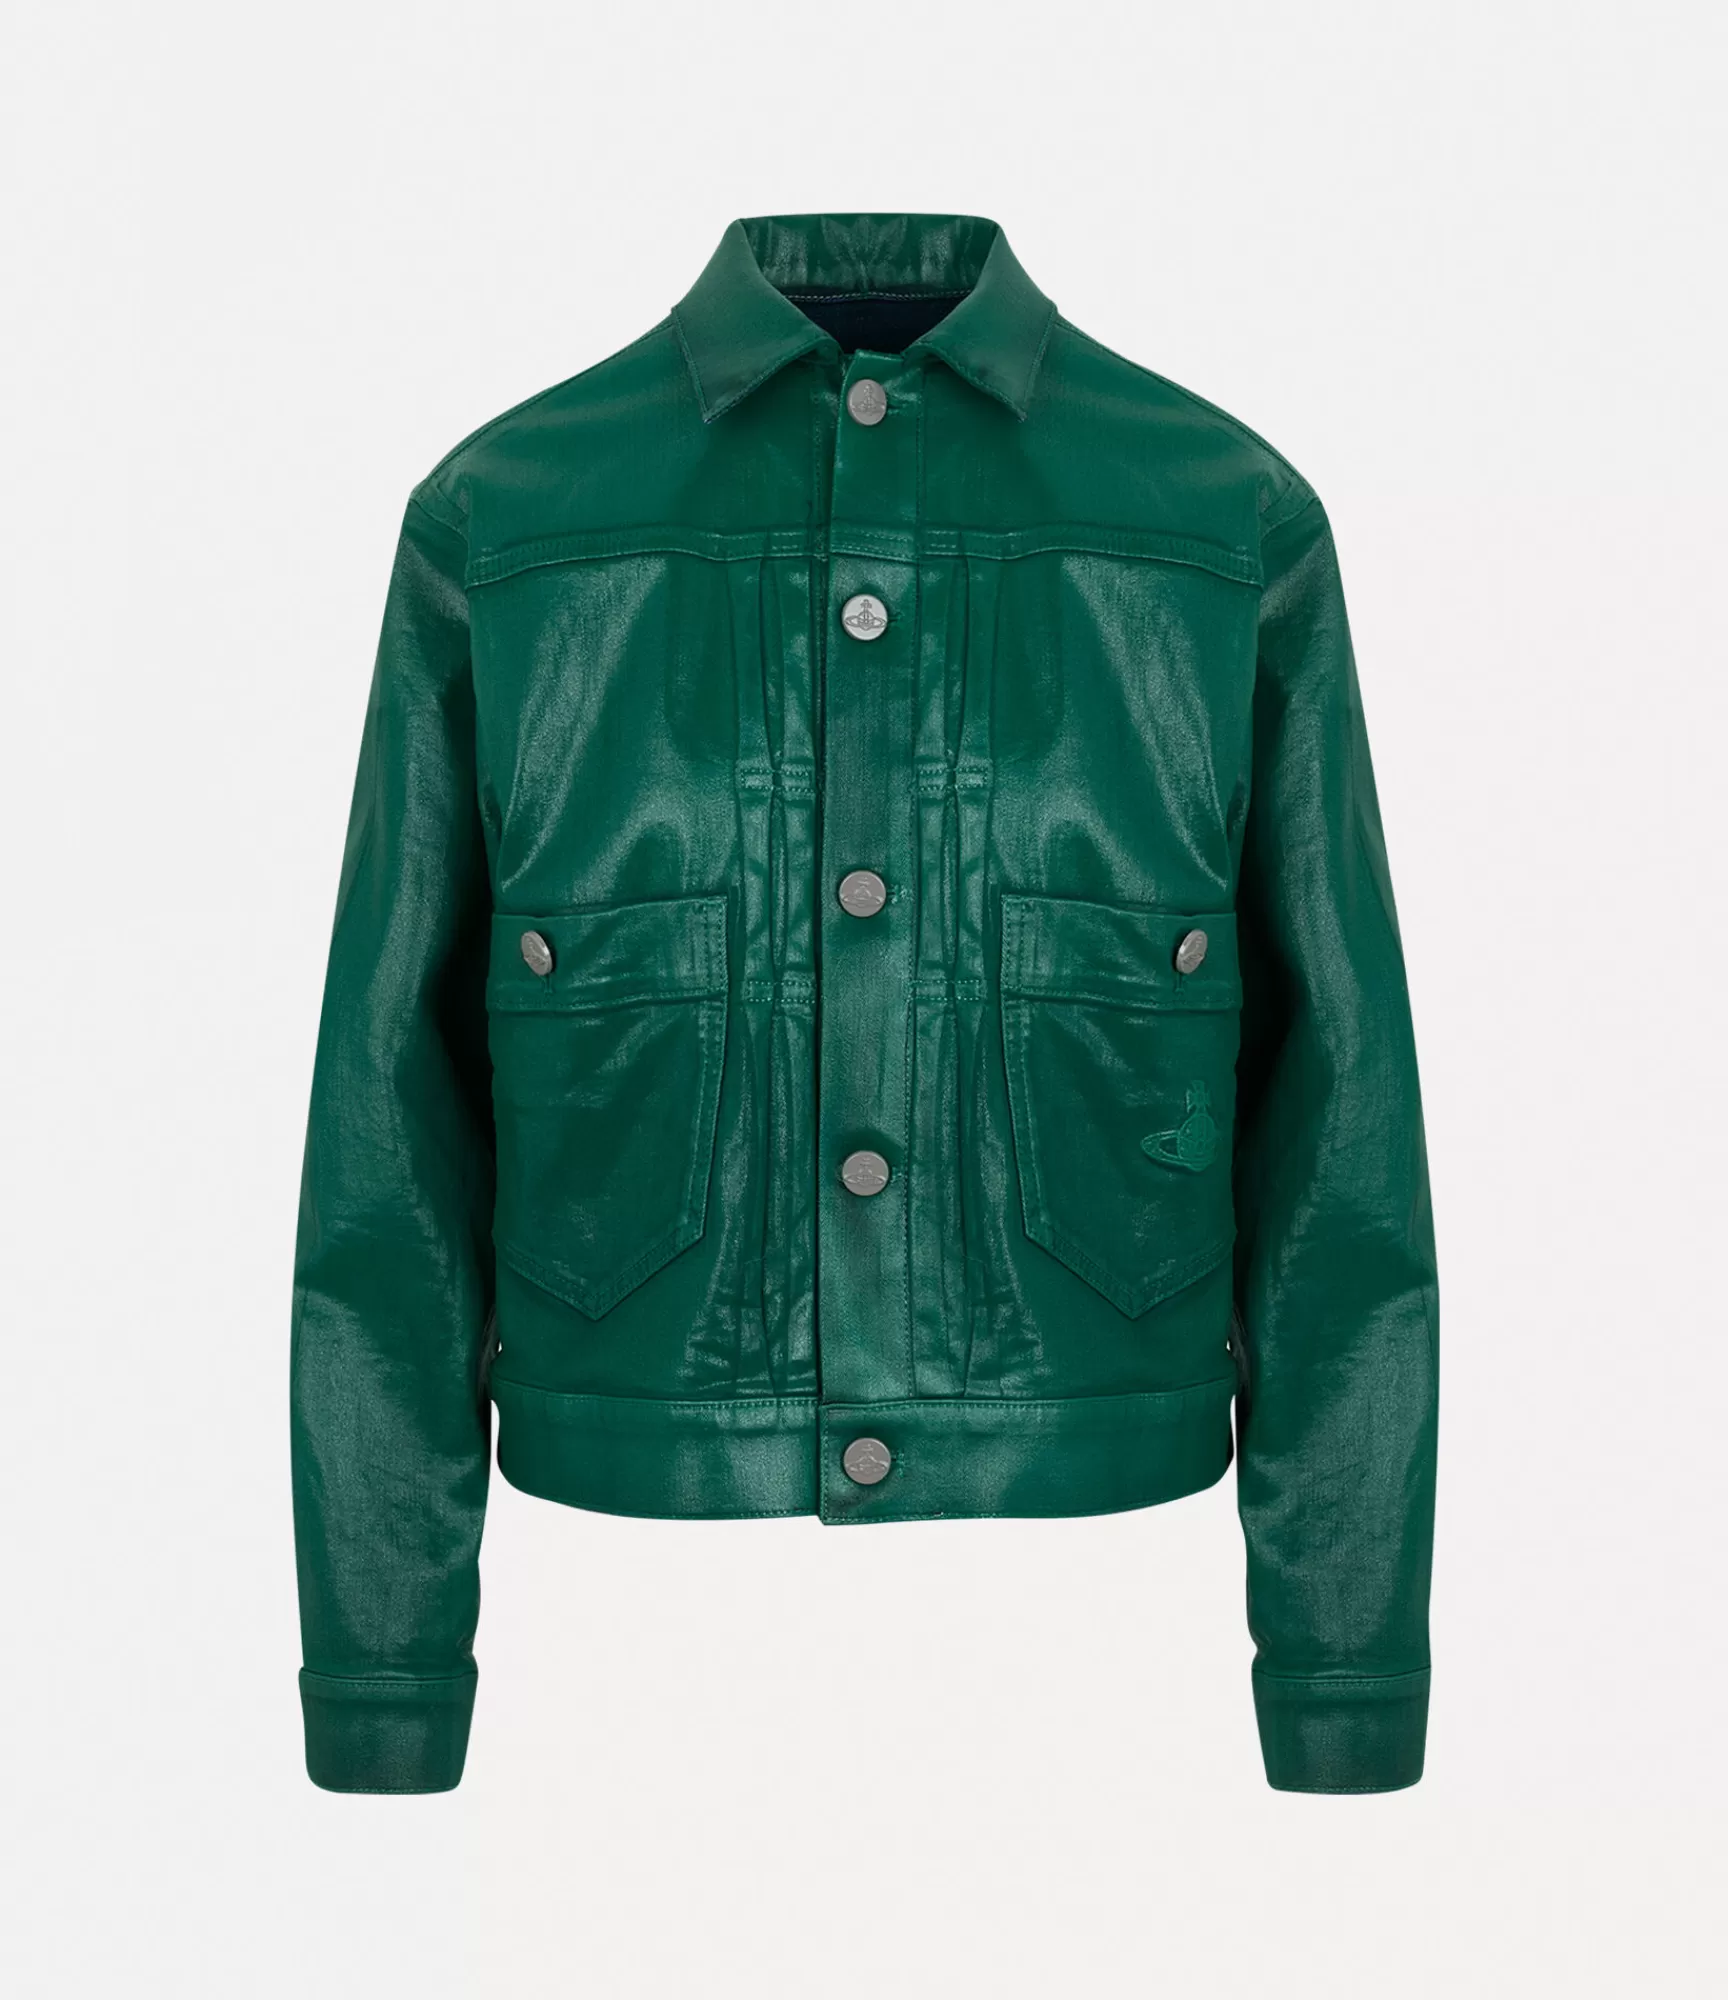 Vivienne Westwood Coats and Jackets*Marlene jacket Green